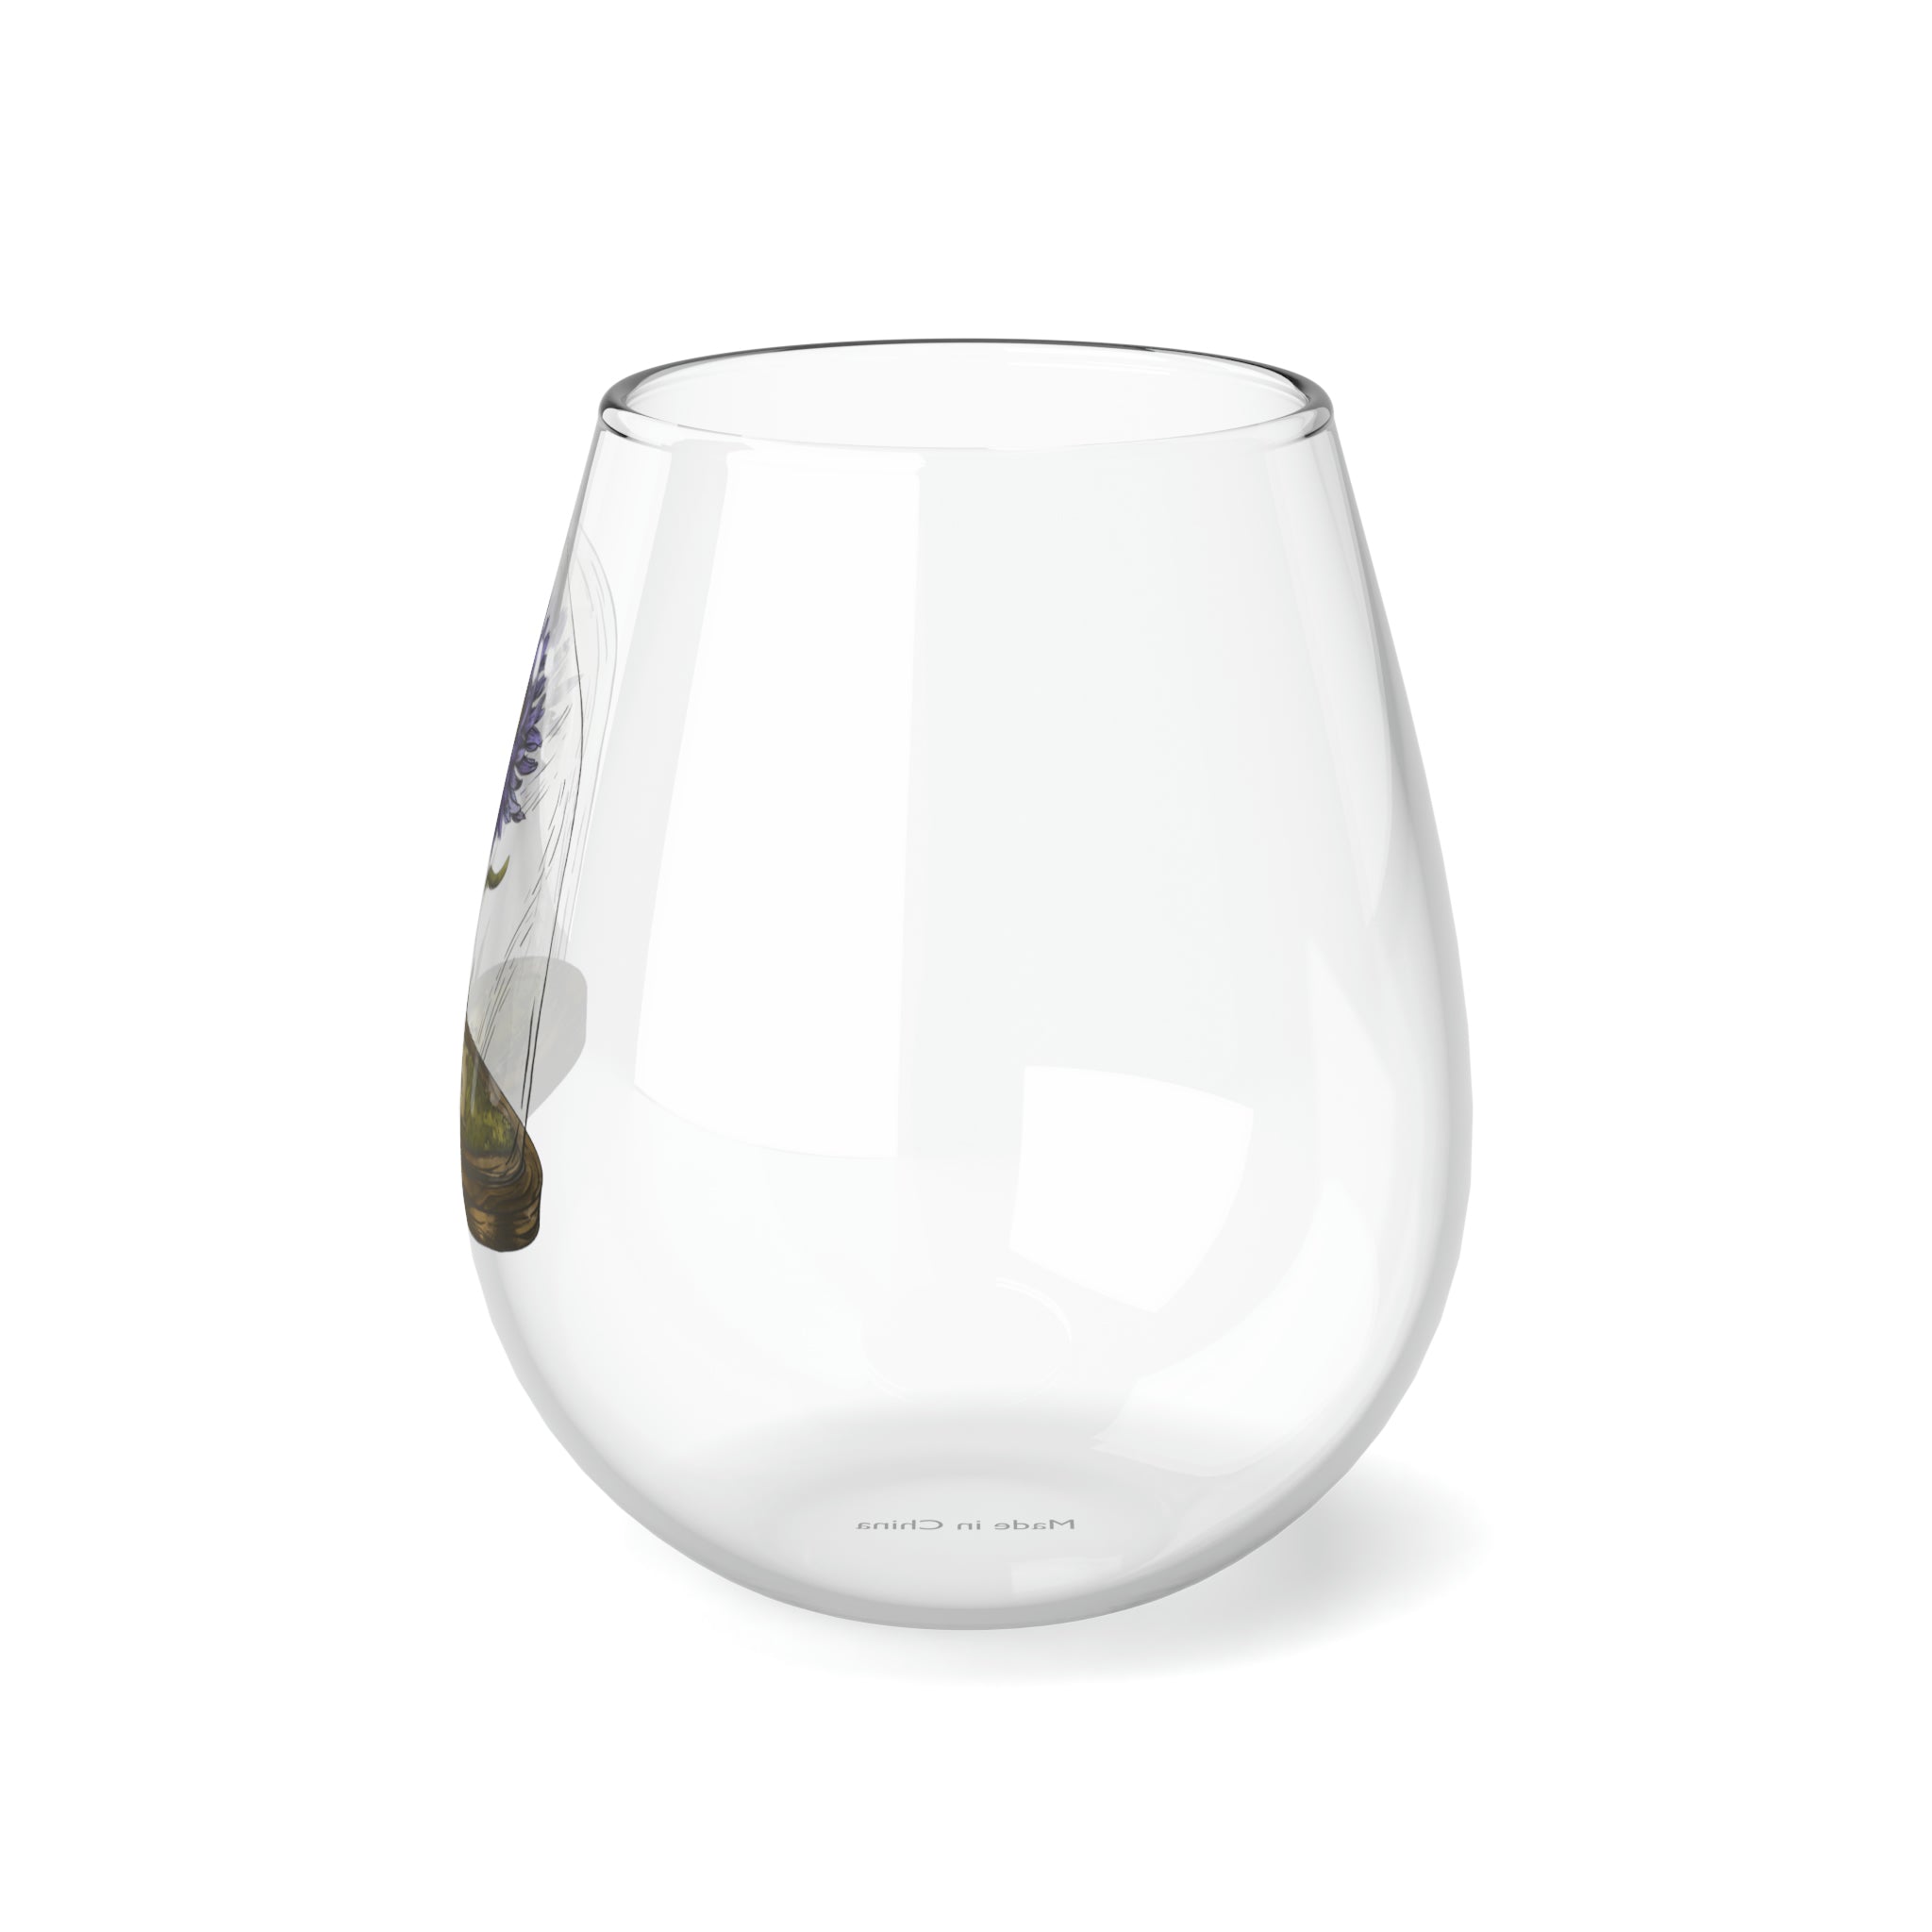 Stemless Wine Glass, 11.75oz - September Birth Flower